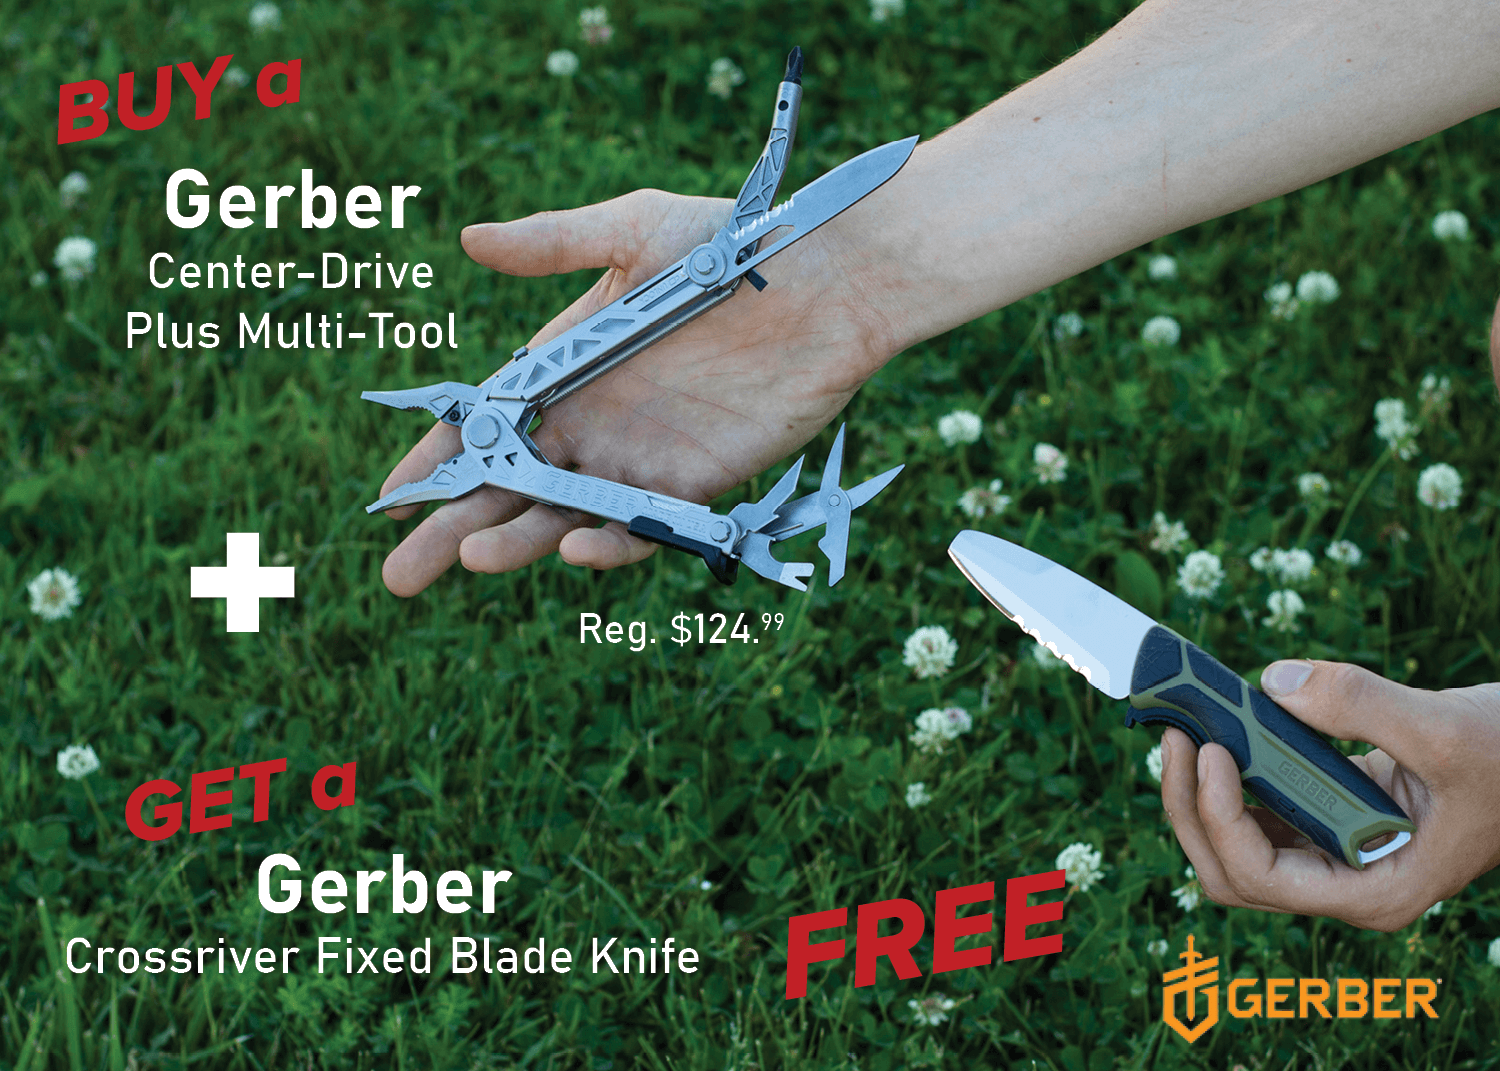 Buy a Gerber Center-Drive Plus Multi-Tool & Get a FREE 